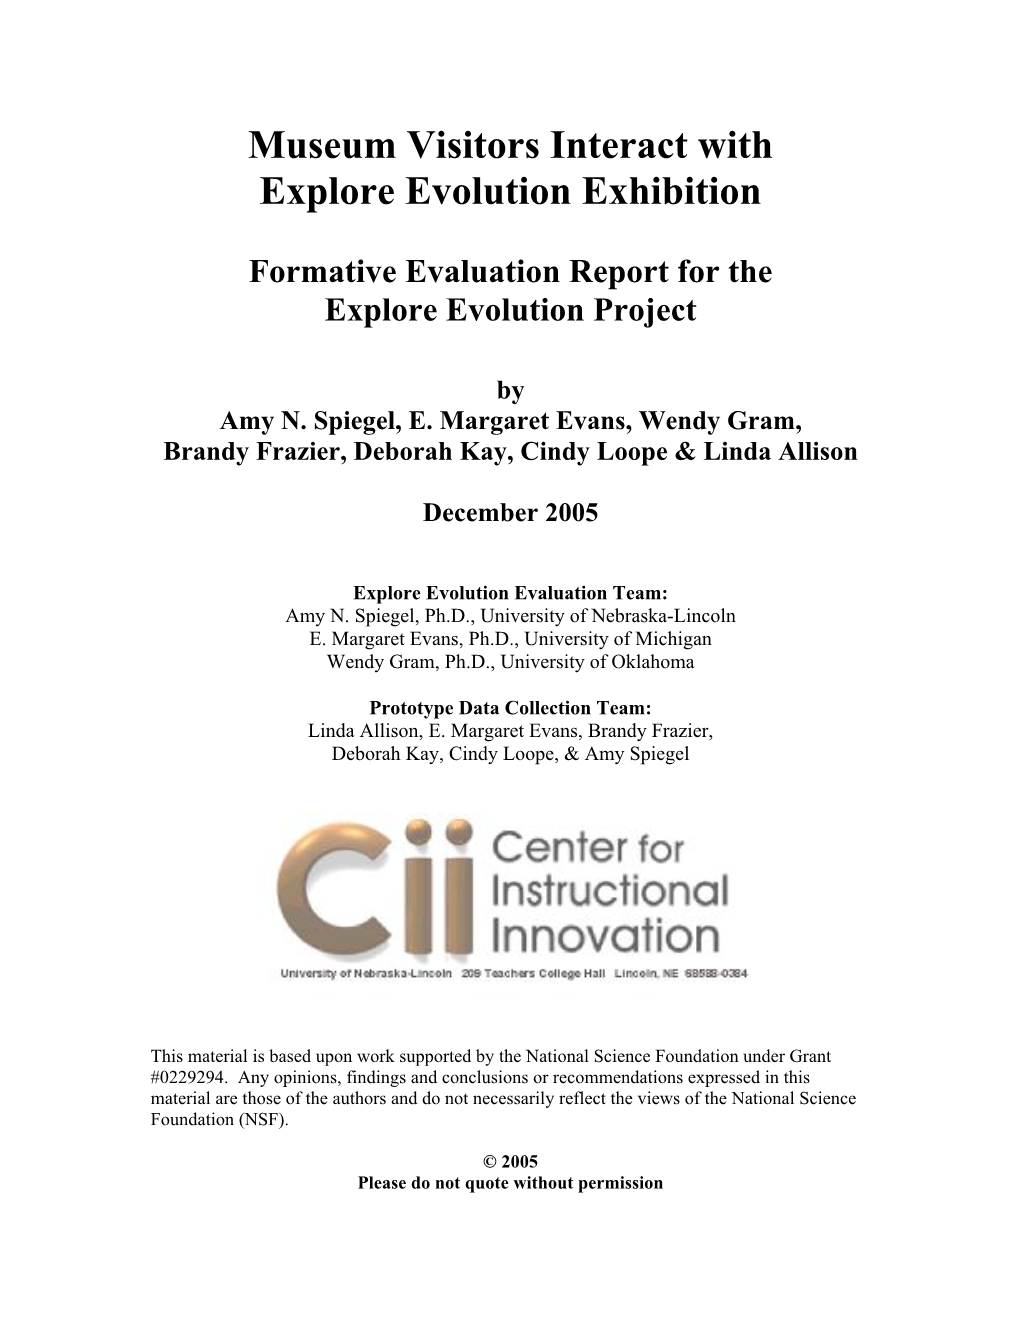 Explore Evolution Exhibition